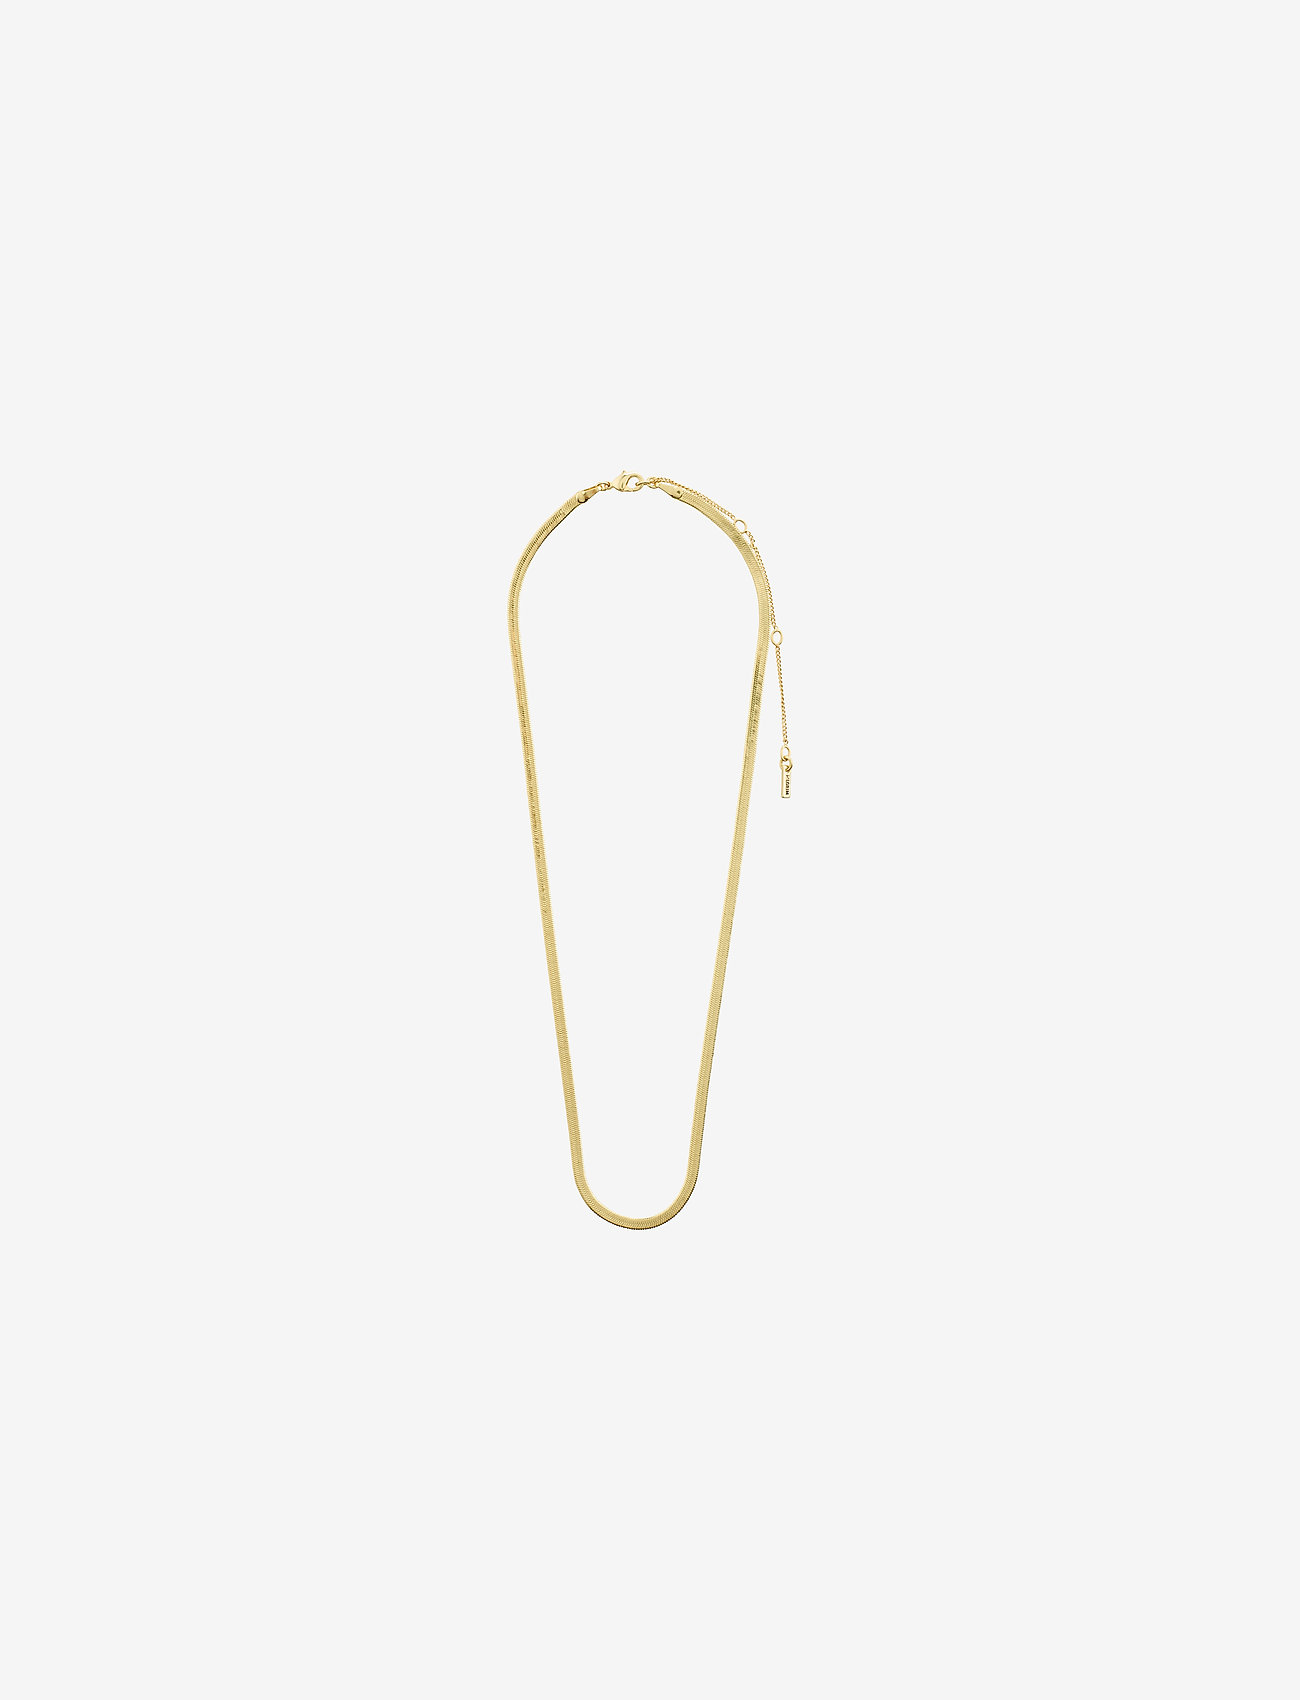 Pilgrim - JOANNA flat snake chain necklace gold-plated - chain necklaces - gold plated - 1